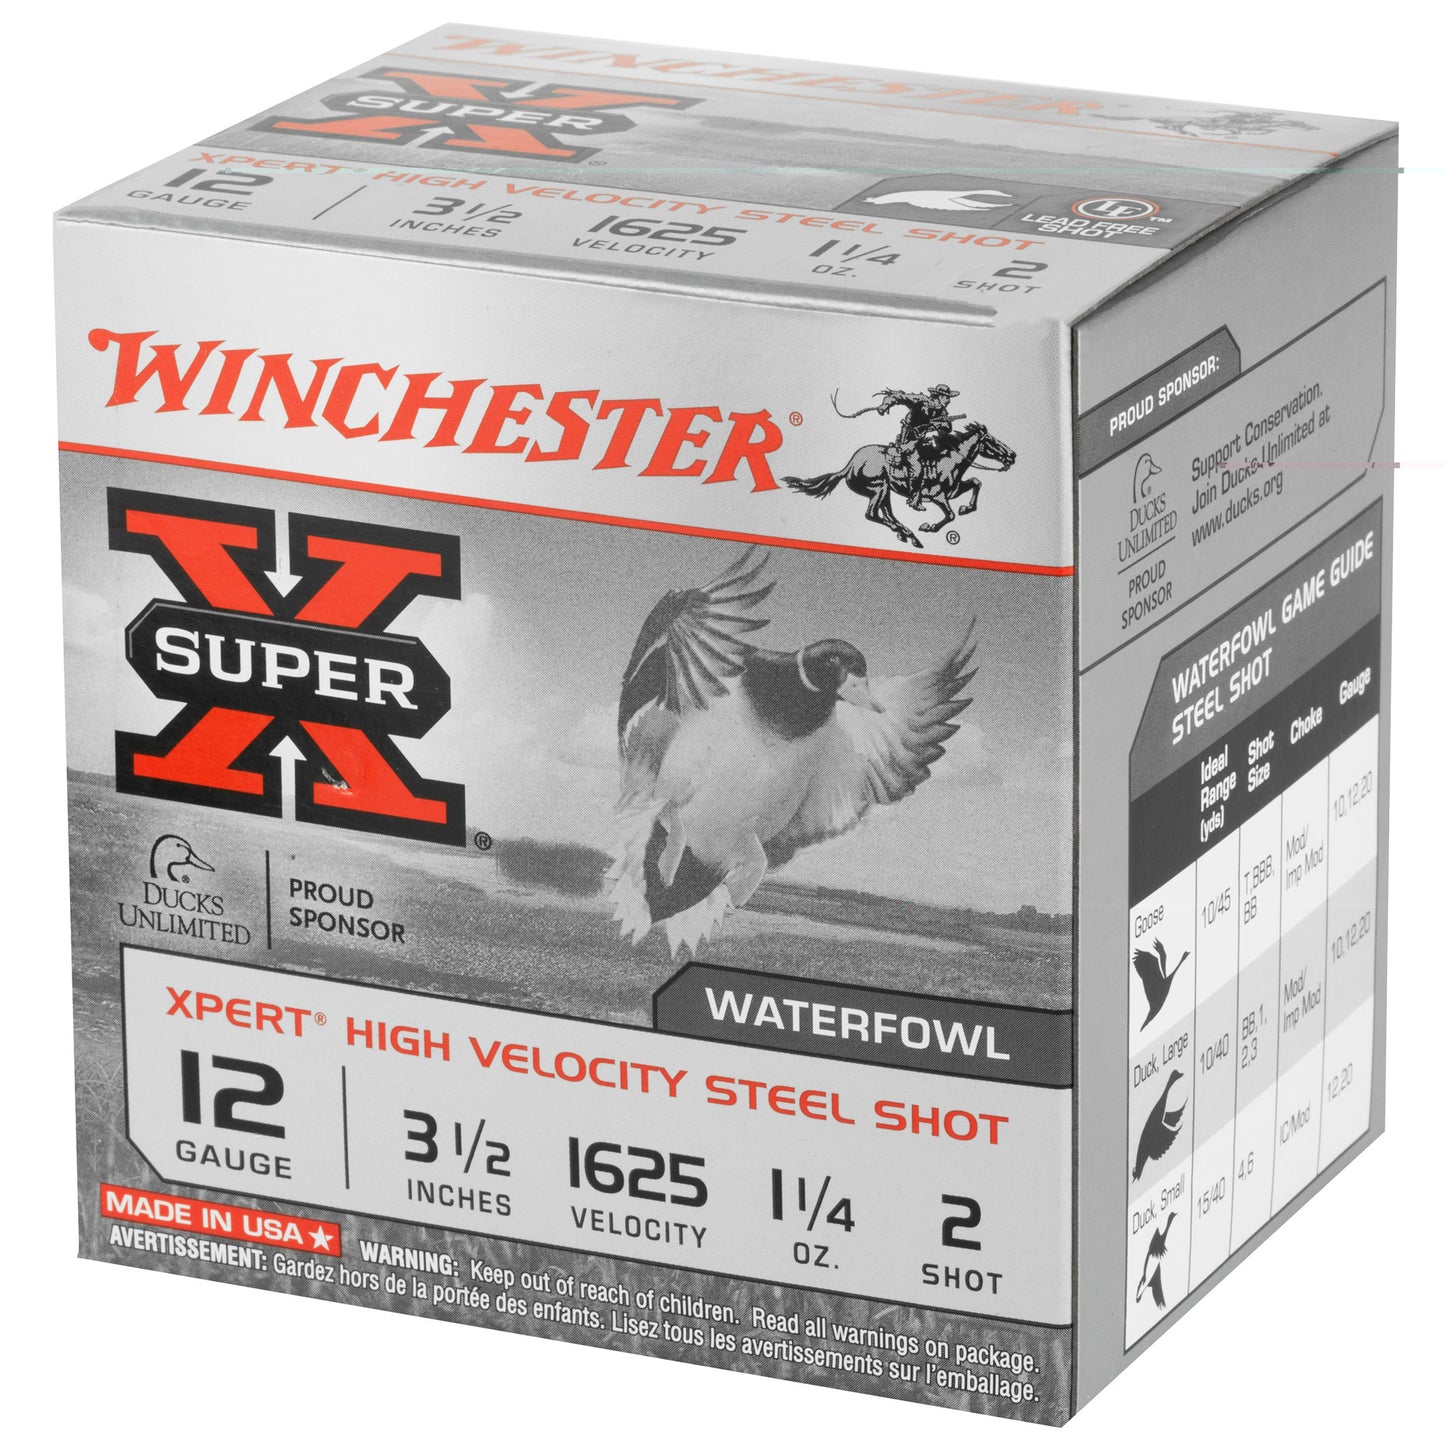 Winchester Ammunition, Xpert HI-Velocity, Steel, 12 Gauge, 3.5", #2, 1 1/4 oz., Steel Shot, Lead Free, 25 Round Box